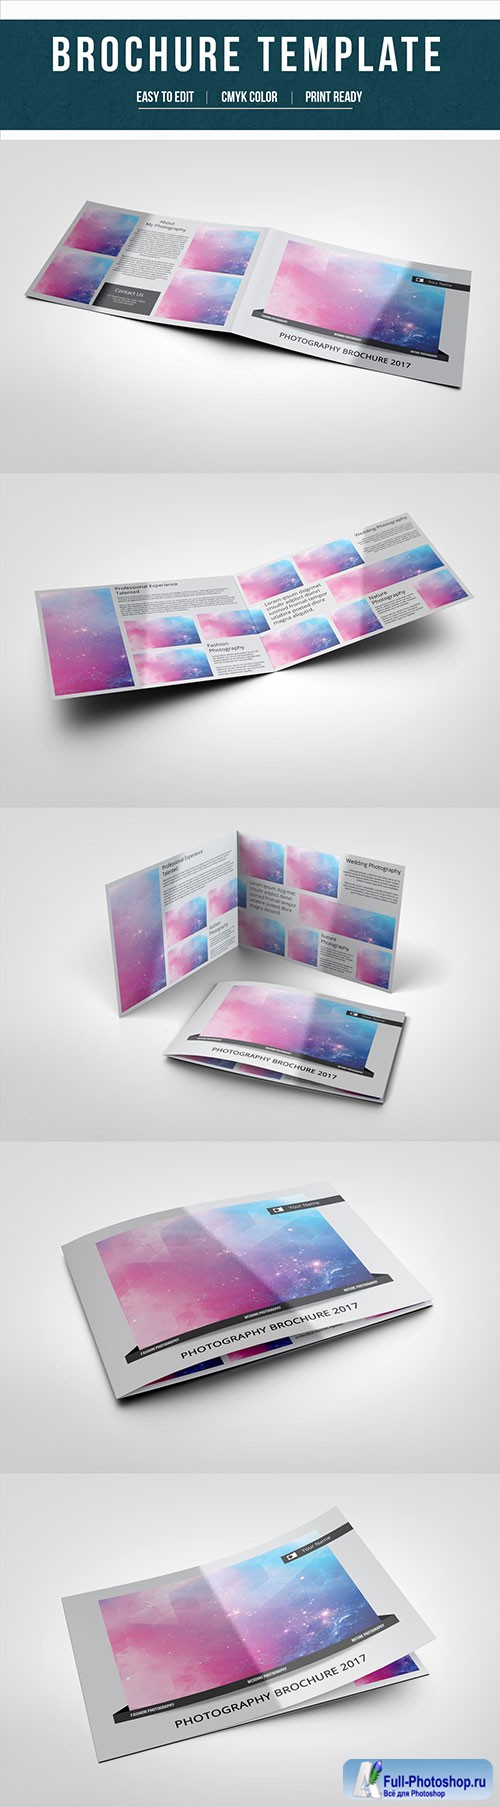 AdobeStock Photography Brochure Layout 3 179868096